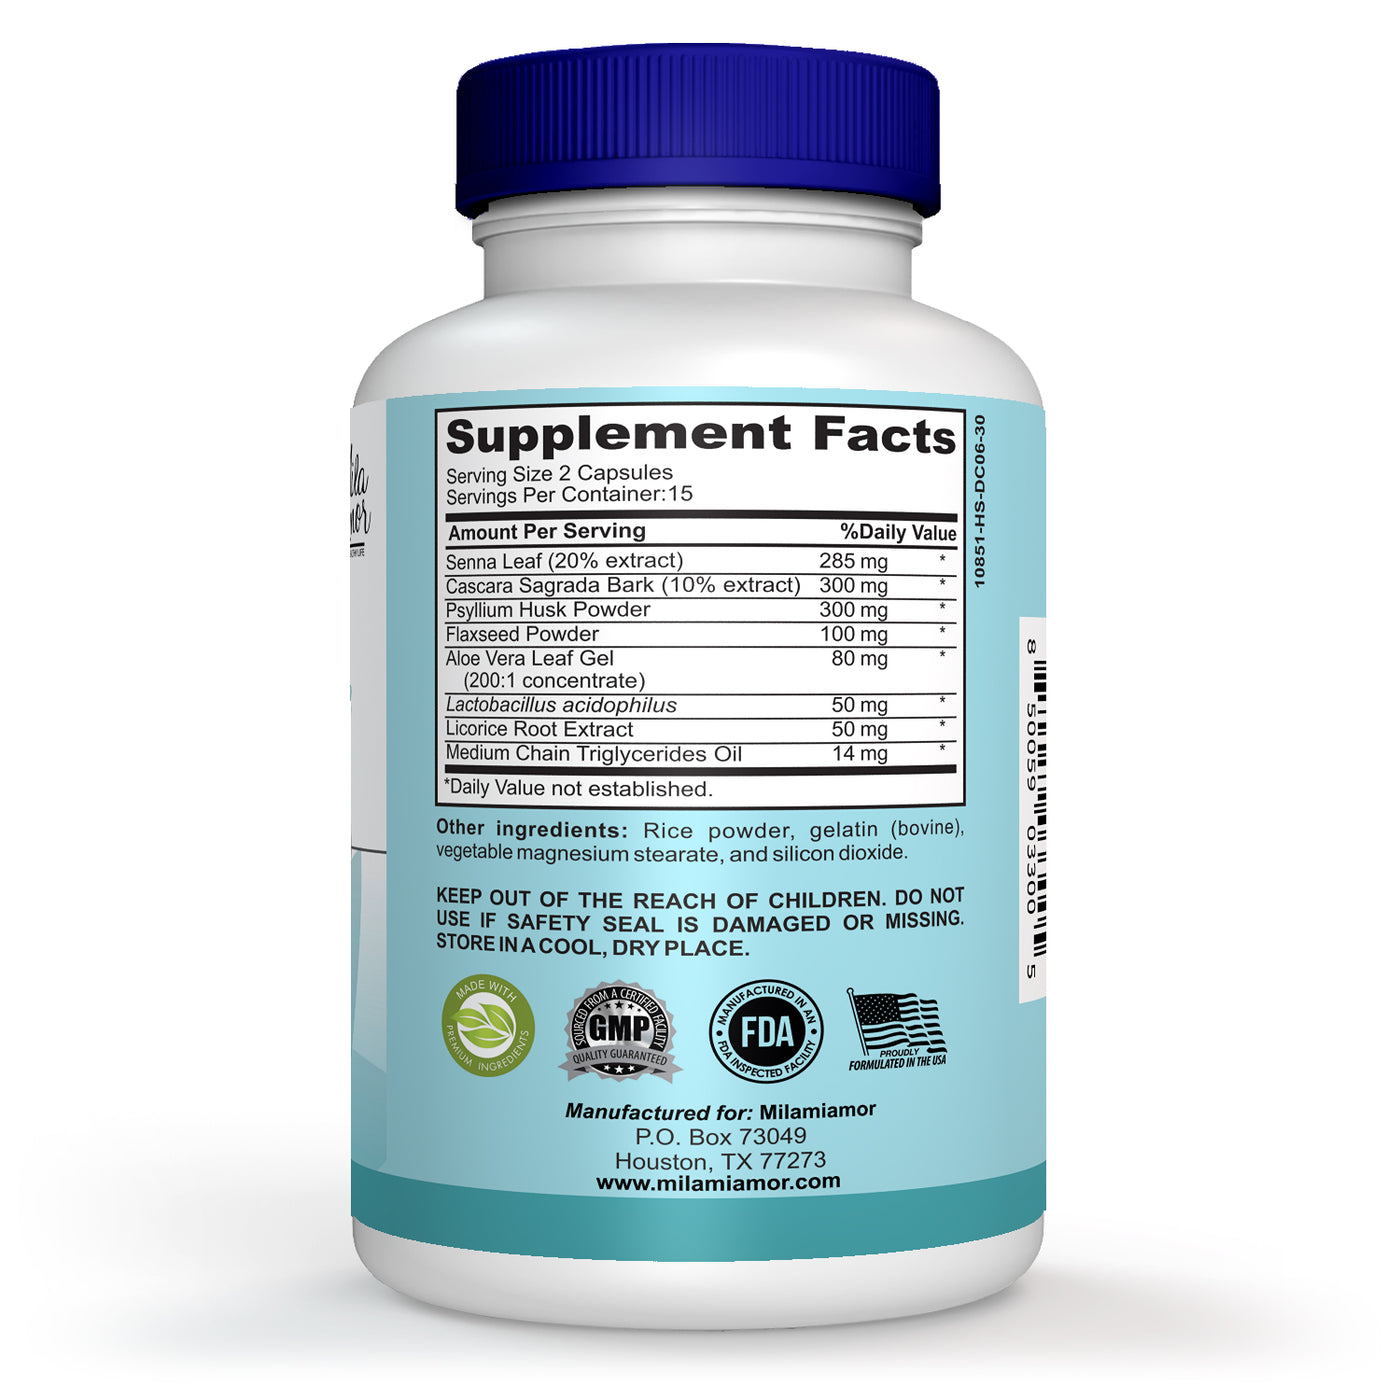 15-day cleanse - Gut and Colon Support | Caffeine Free | Advanced Formula with Senna, Cascara Sagrada, & Psyllium Husk | Non-GMO | Made in USA | 30 capsules